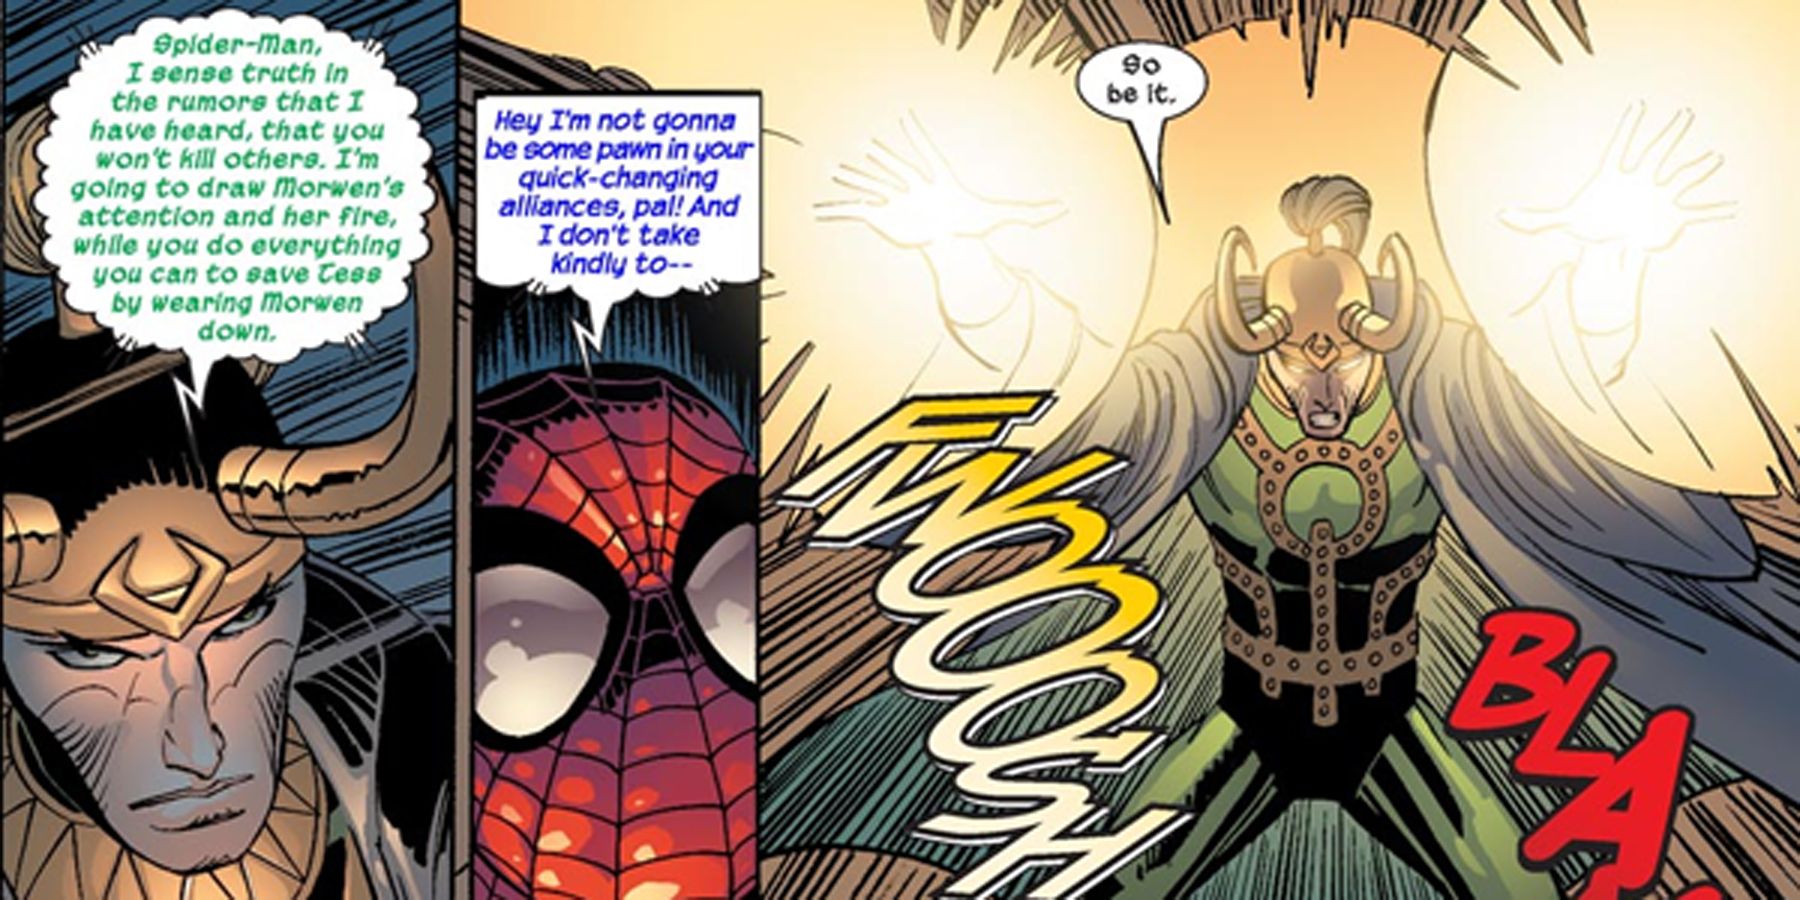 Spider-Man teams up with Loki